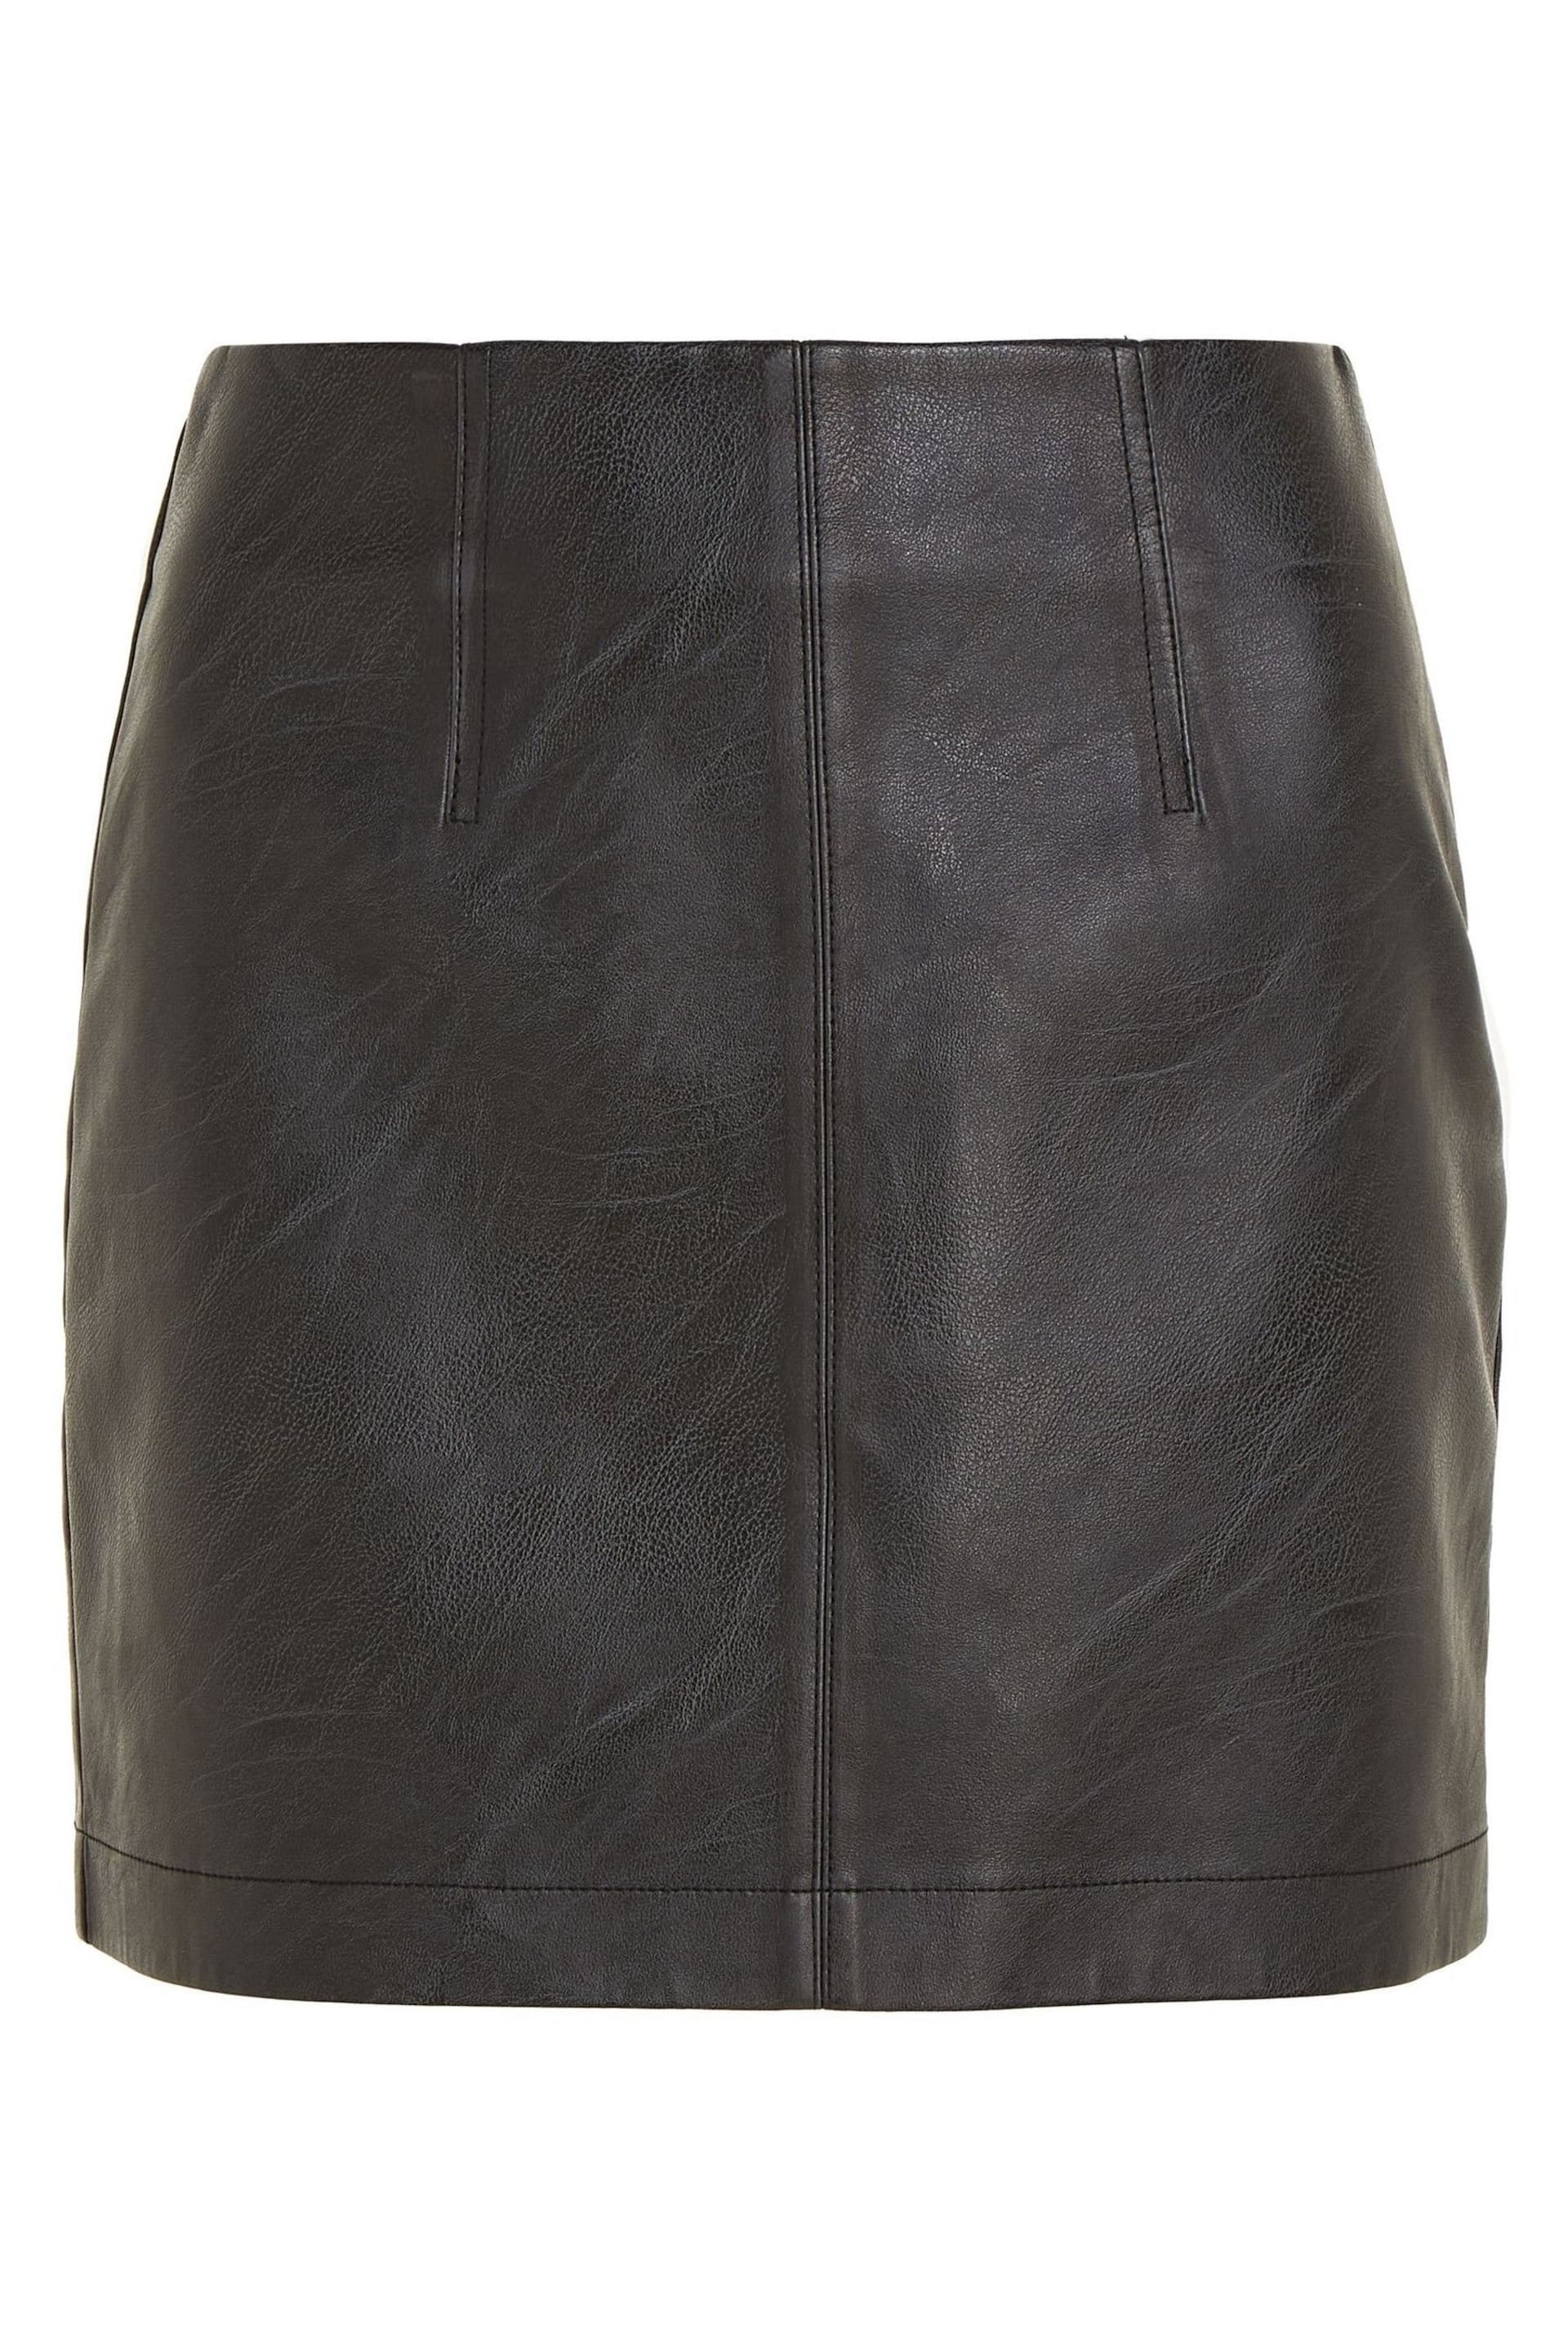 Calvin Klein Black Faux Fur Leather Skirt - Image 4 of 6